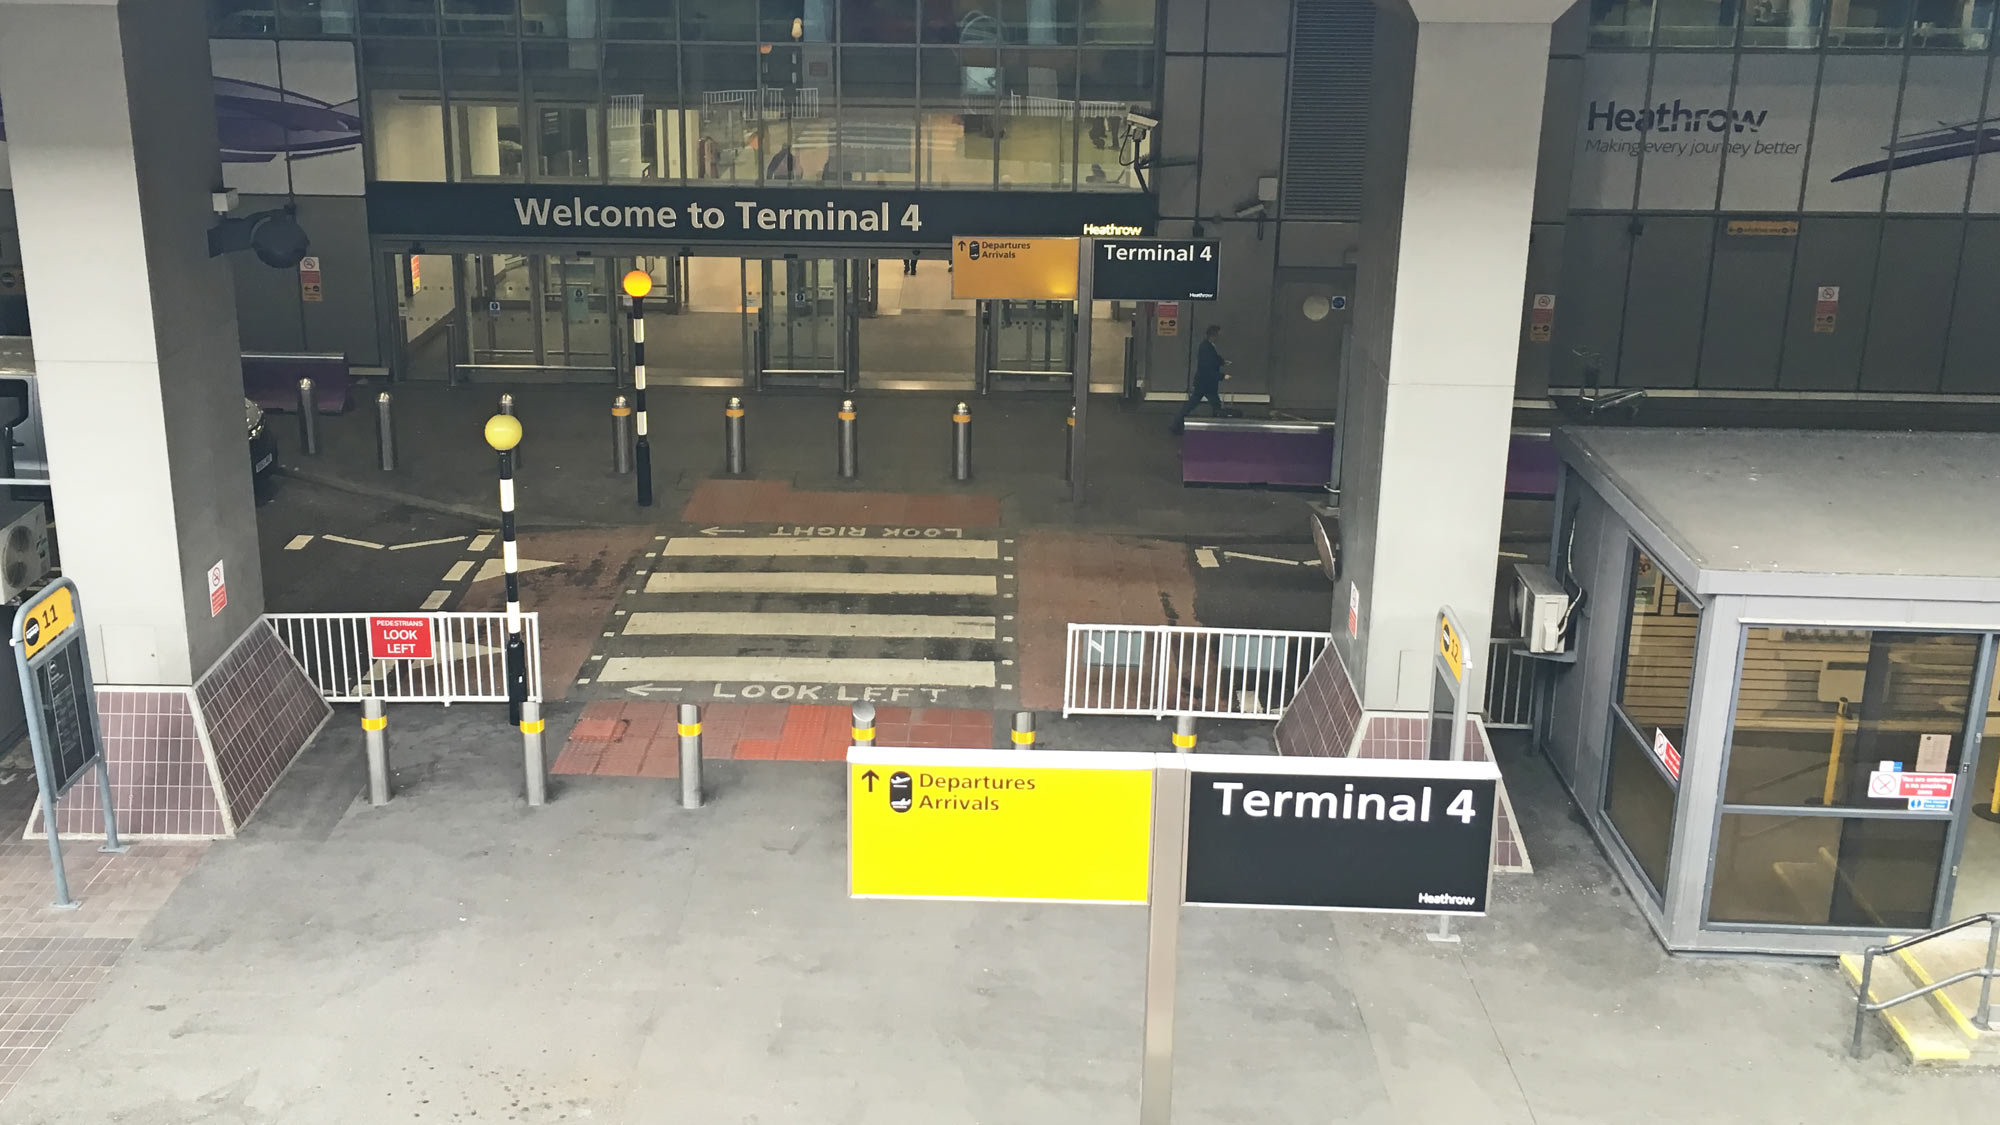 Terminal 4 at Heathrow